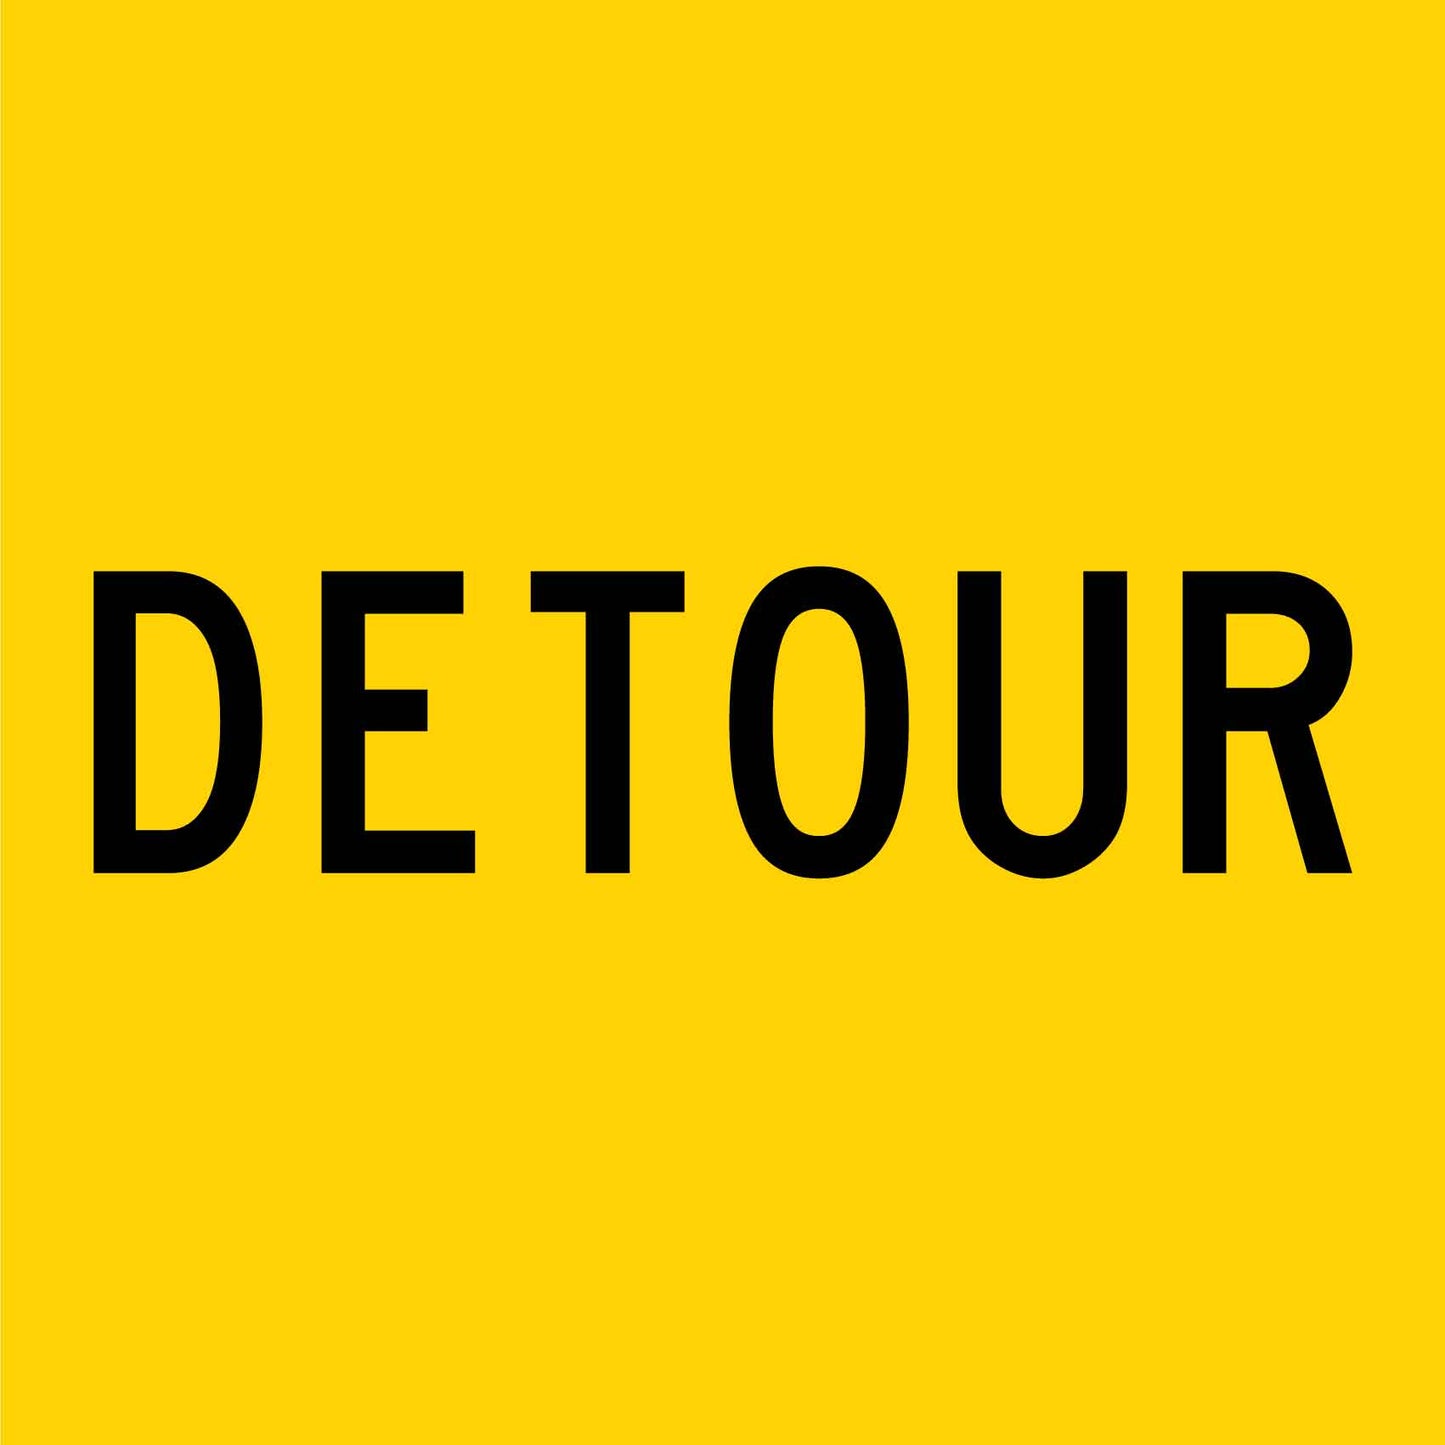 Detour Multi Message Reflective Traffic Sign